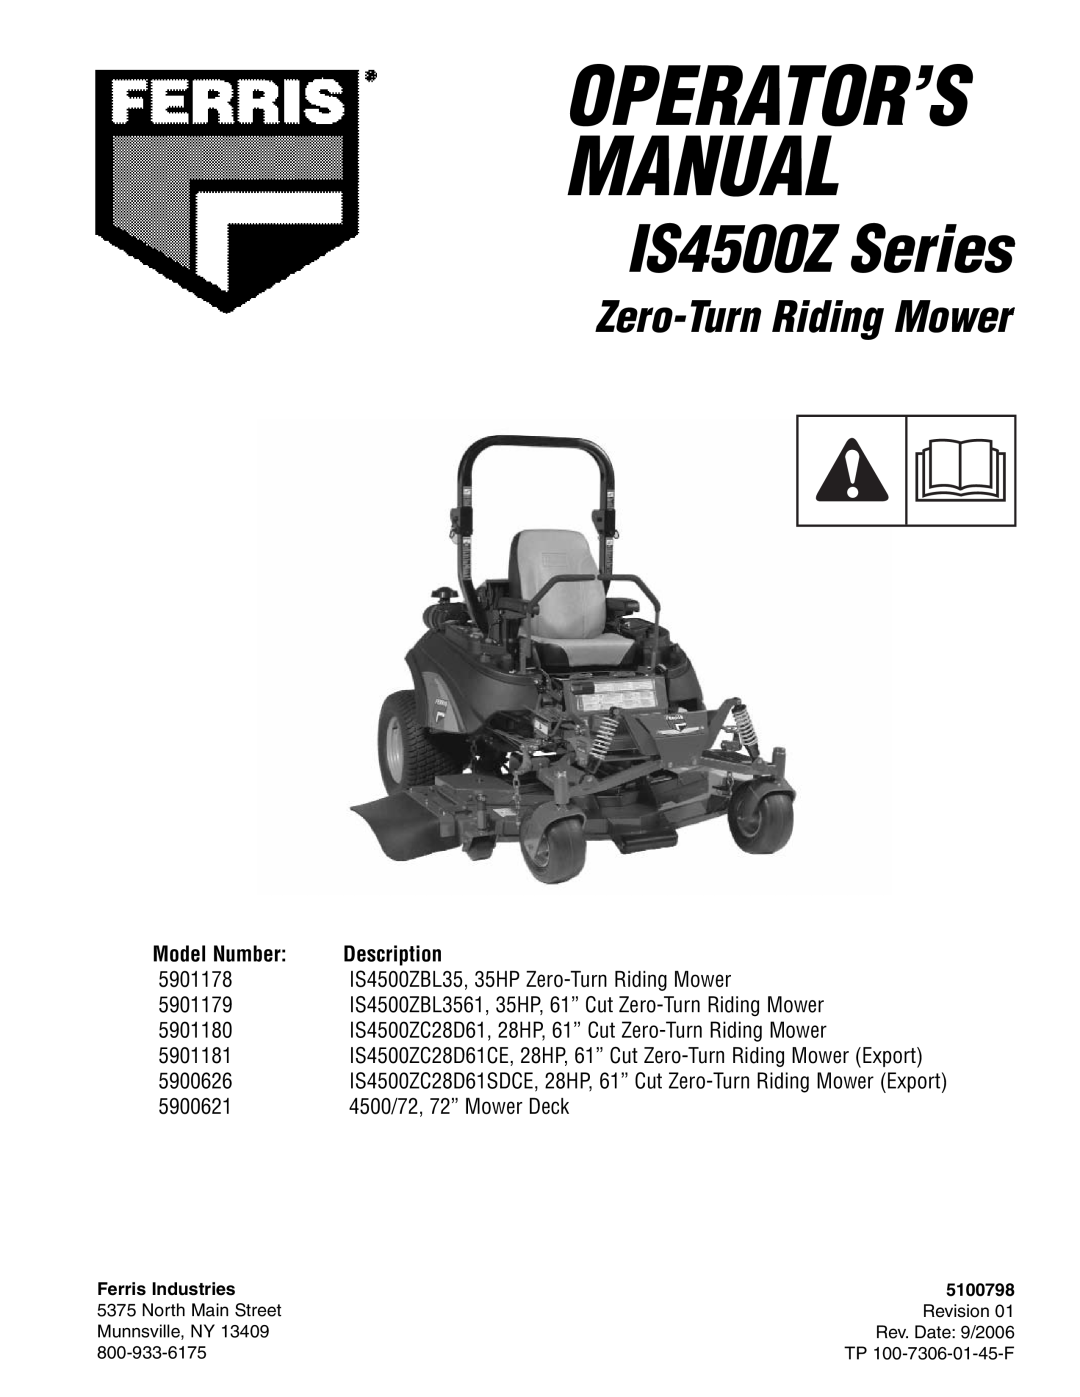 Ferris Industries 5901181 manual IS4500Z Series, Zero-TurnRiding Mower, Manual, Operator’S, 4500/72, 72” Mower Deck 